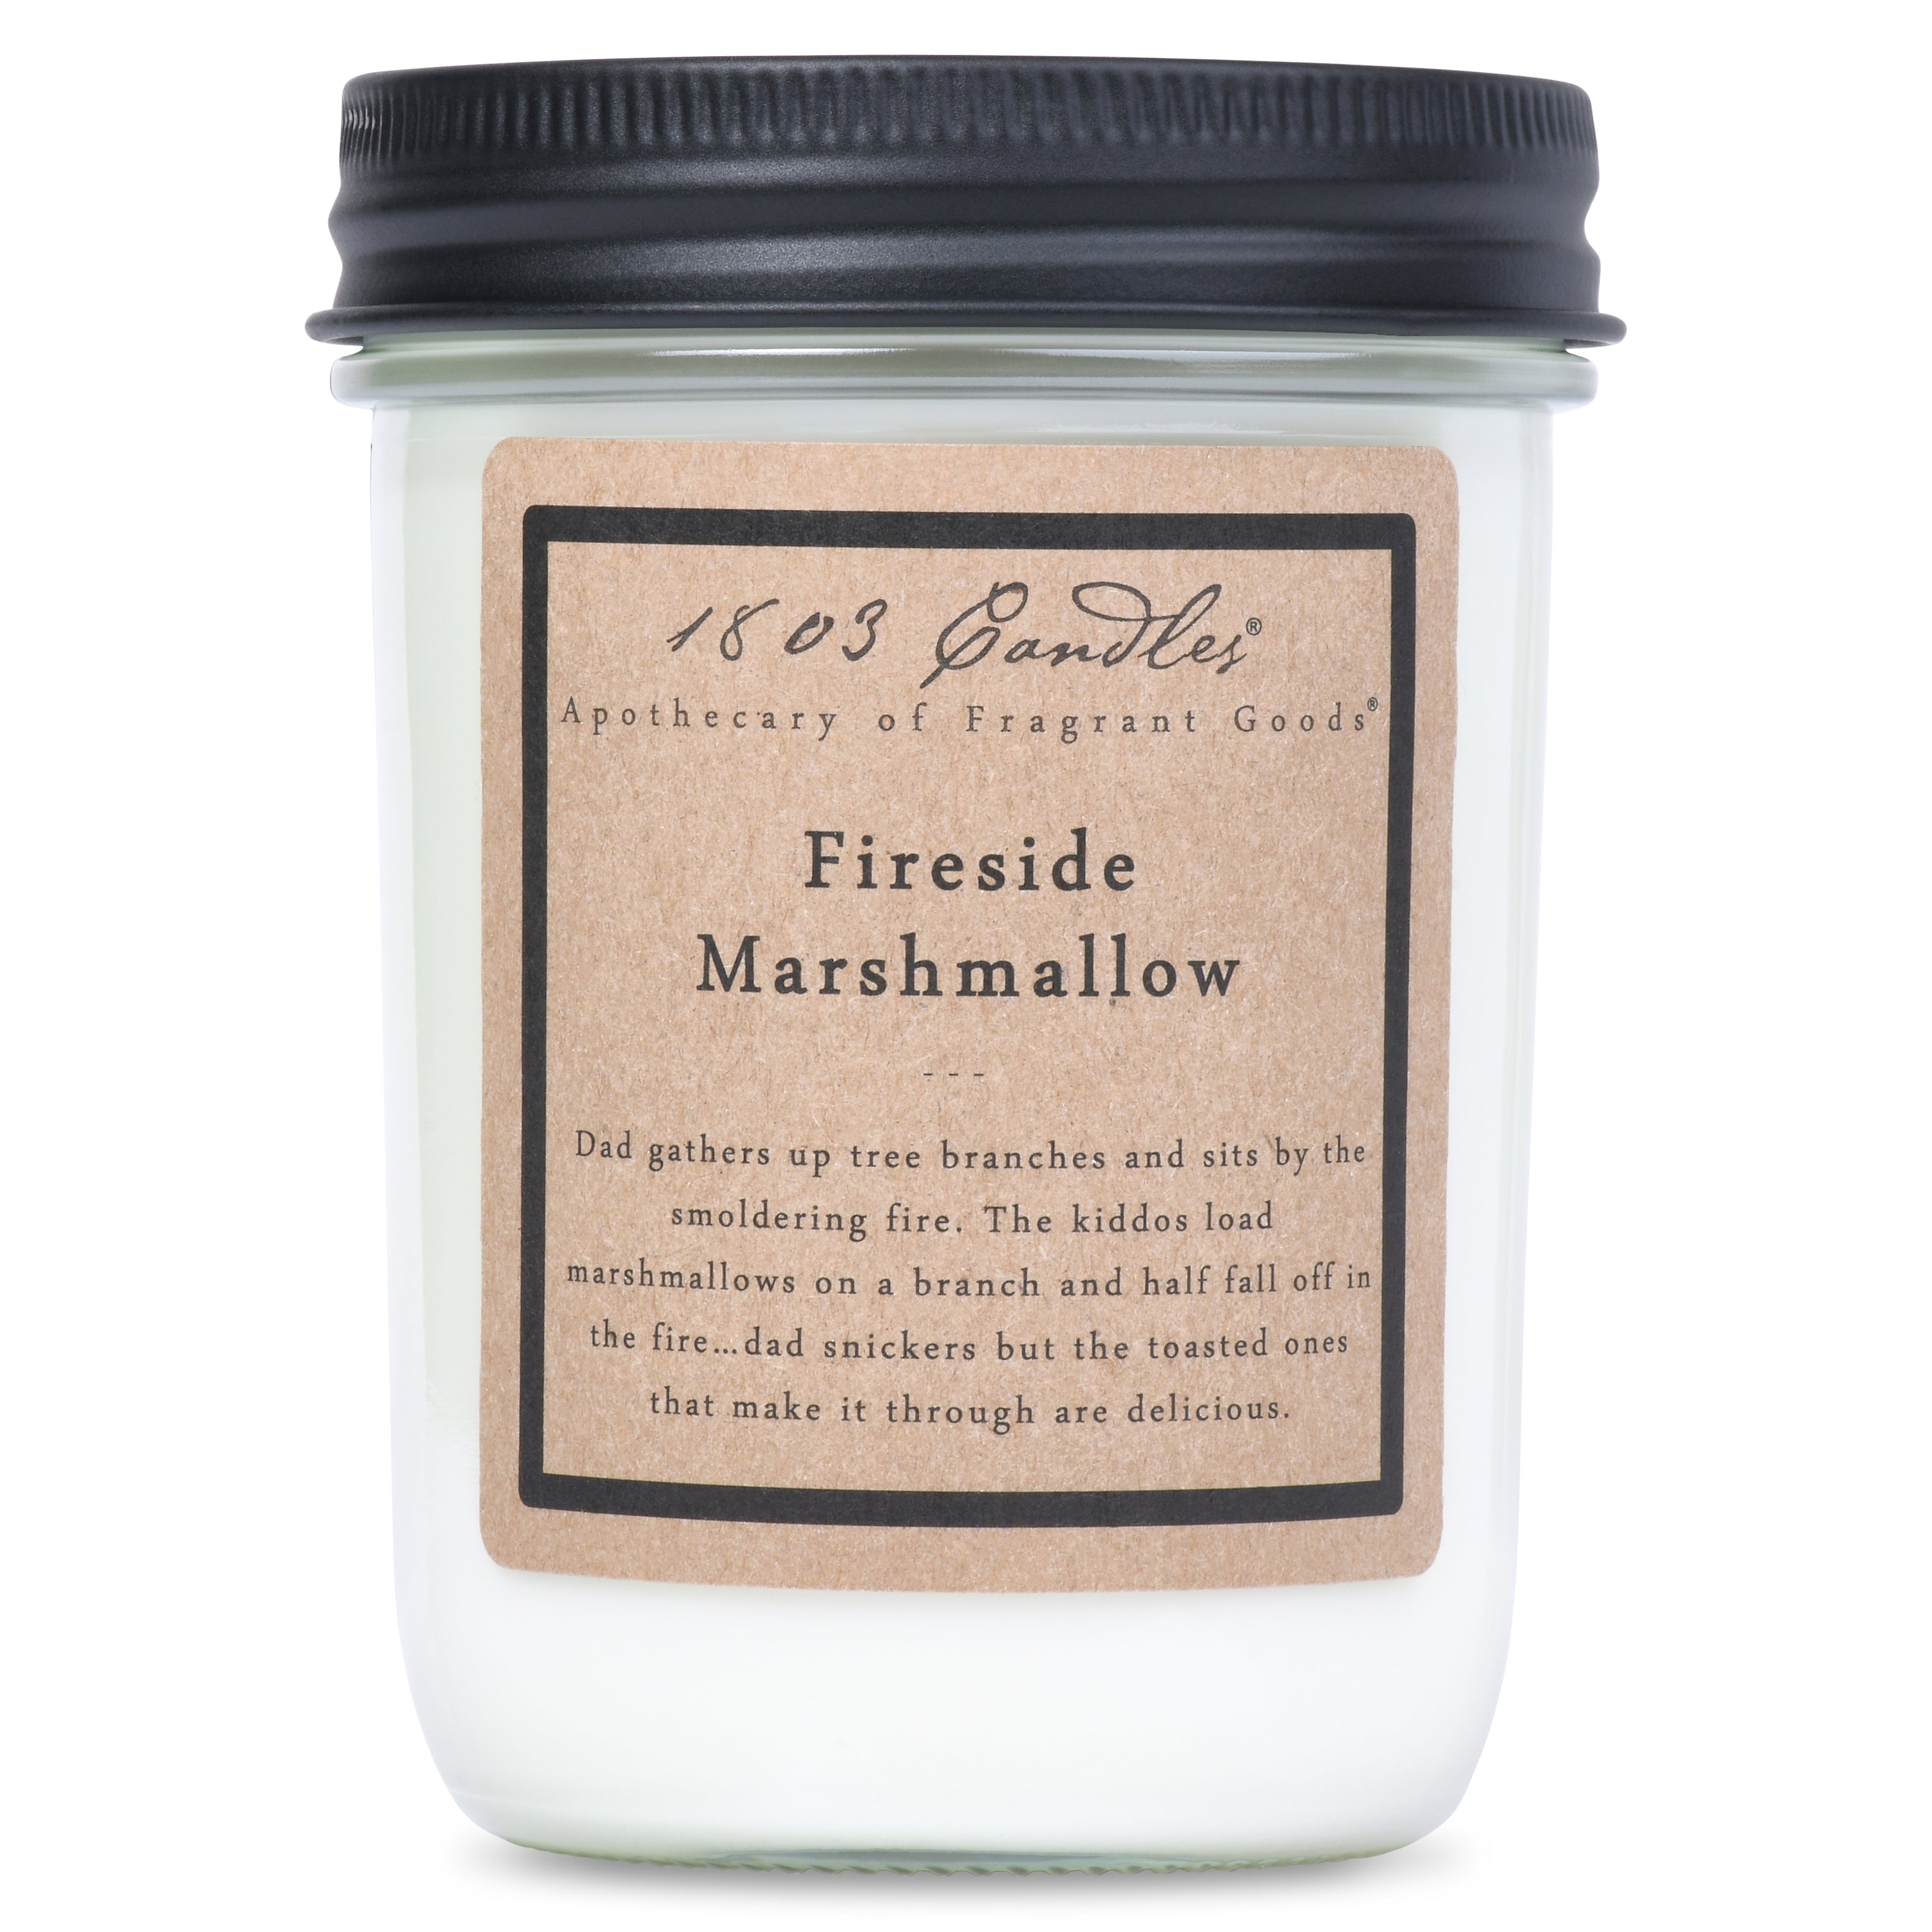 1803 Candles- 14oz Jar - Fireside Marshmallow